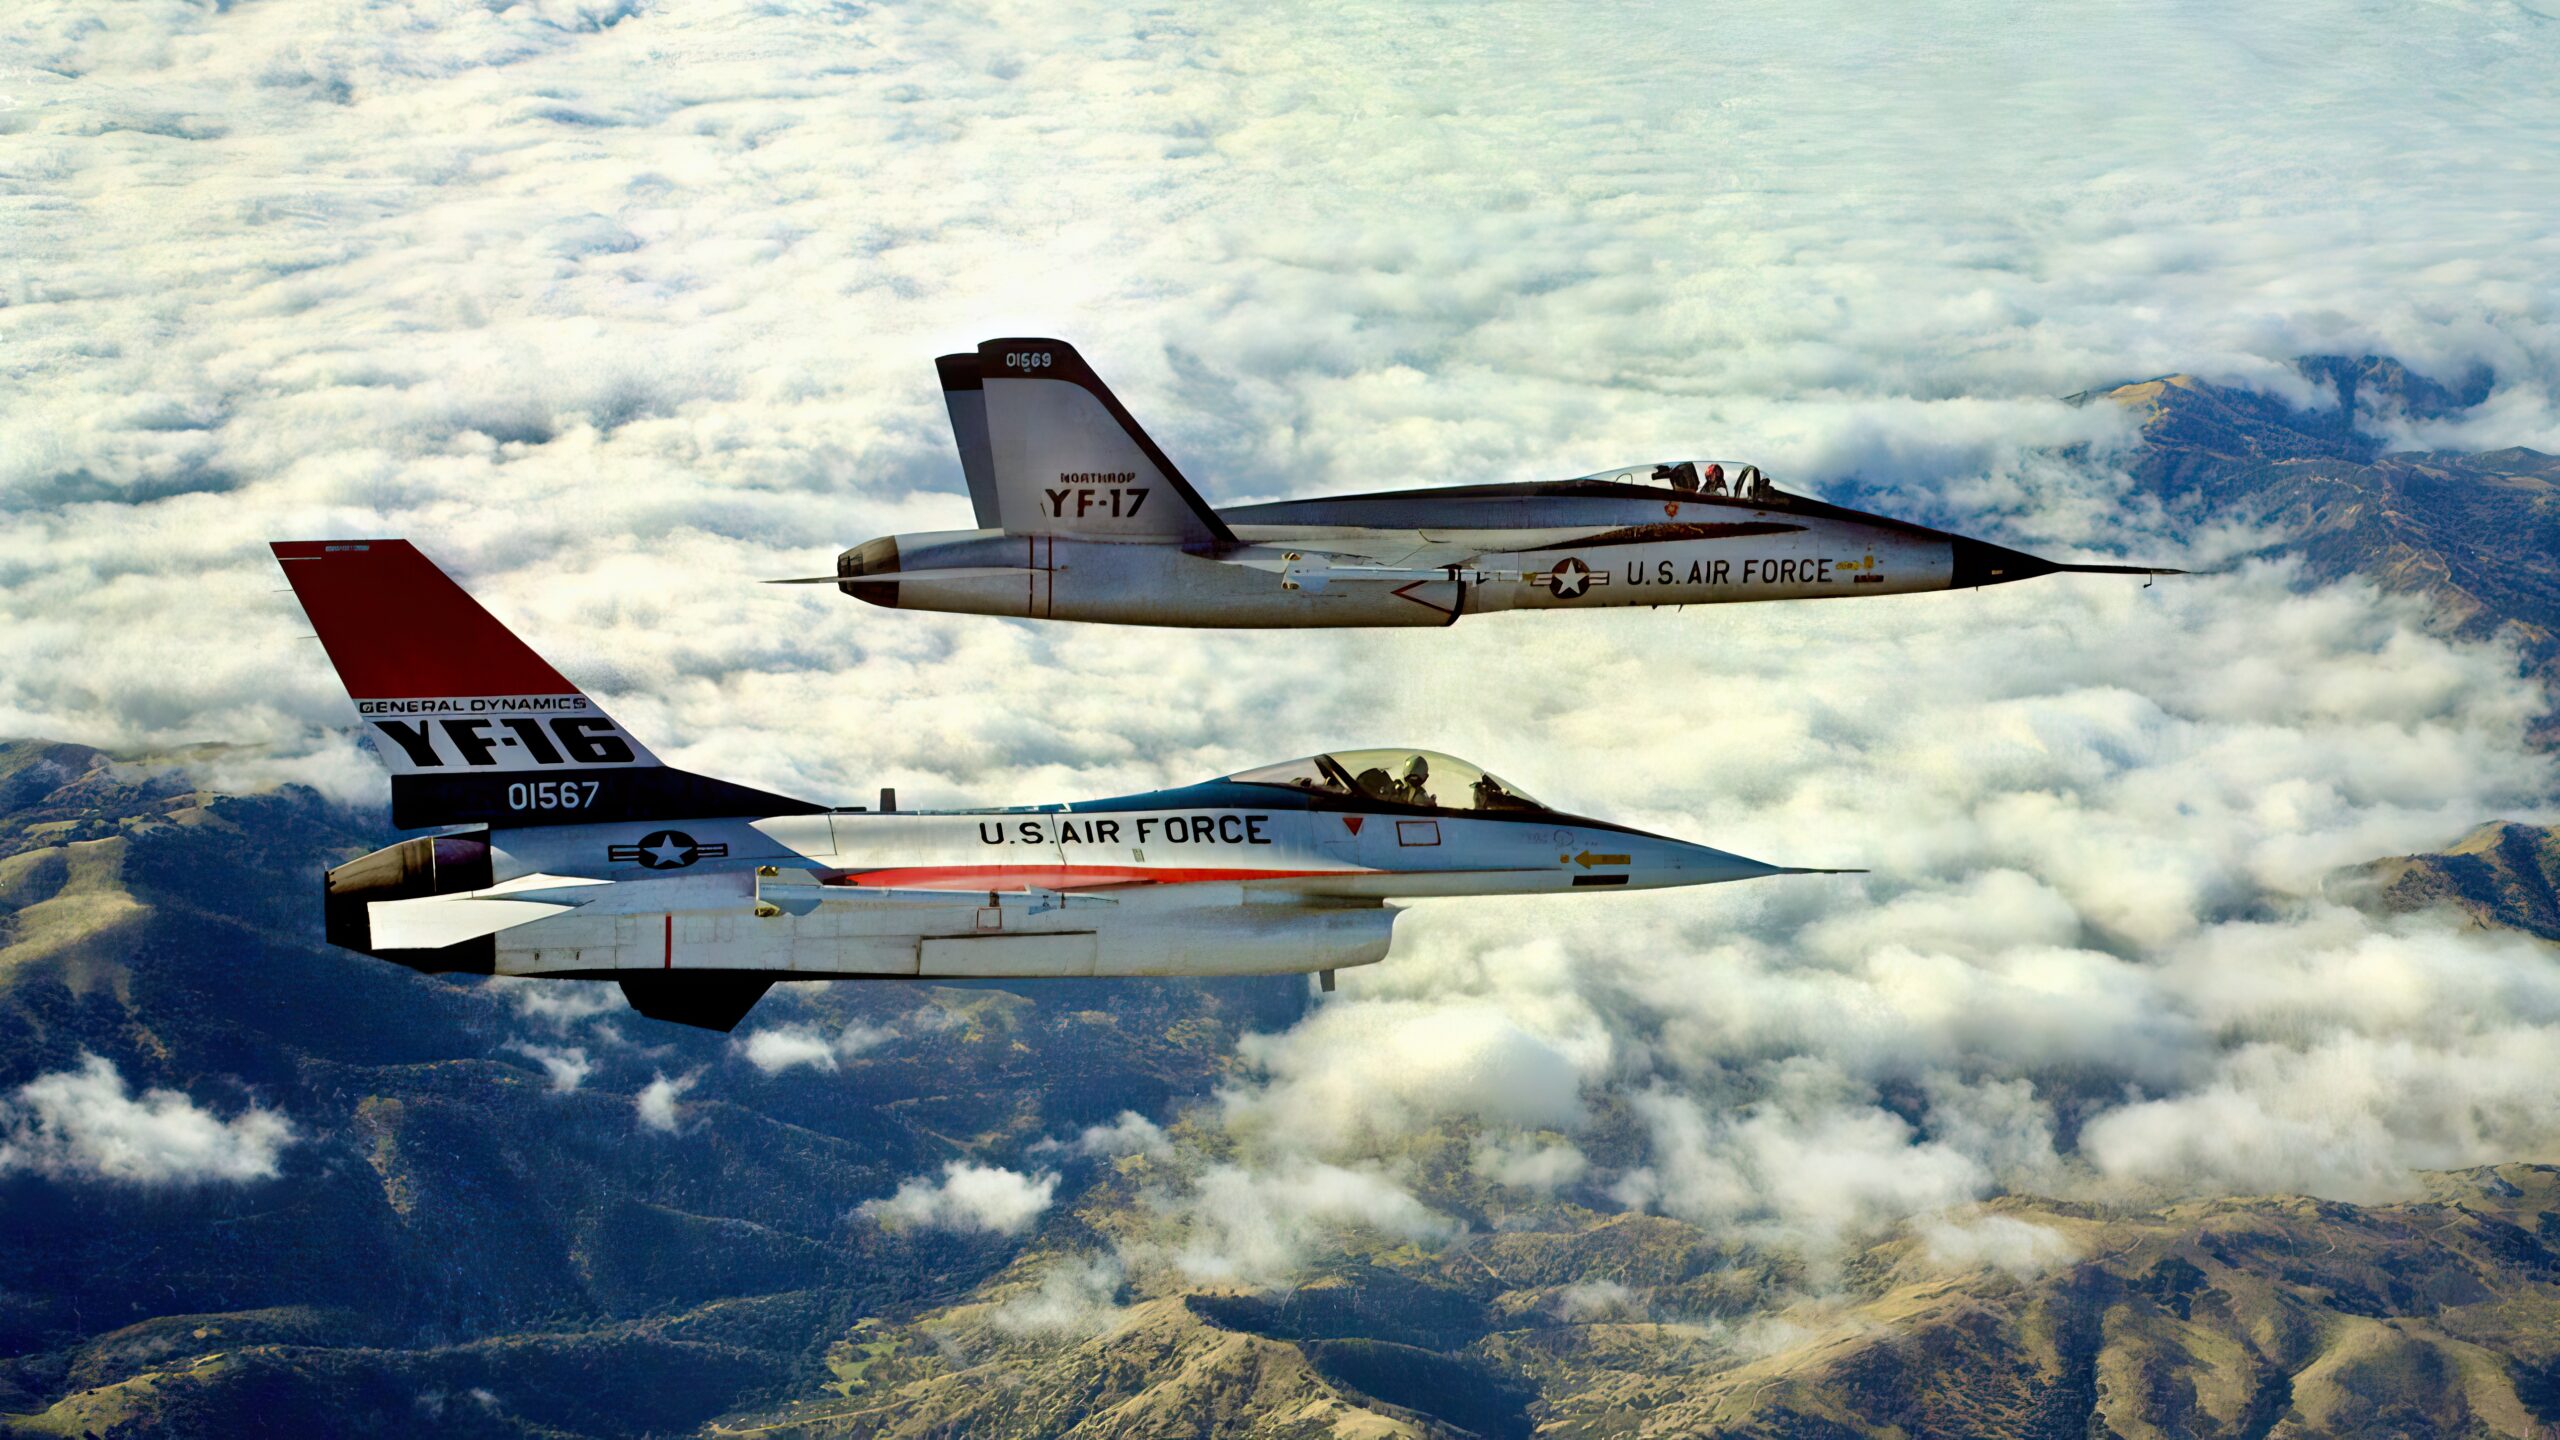 YF-16 aircraft and a YF-17 aircraft